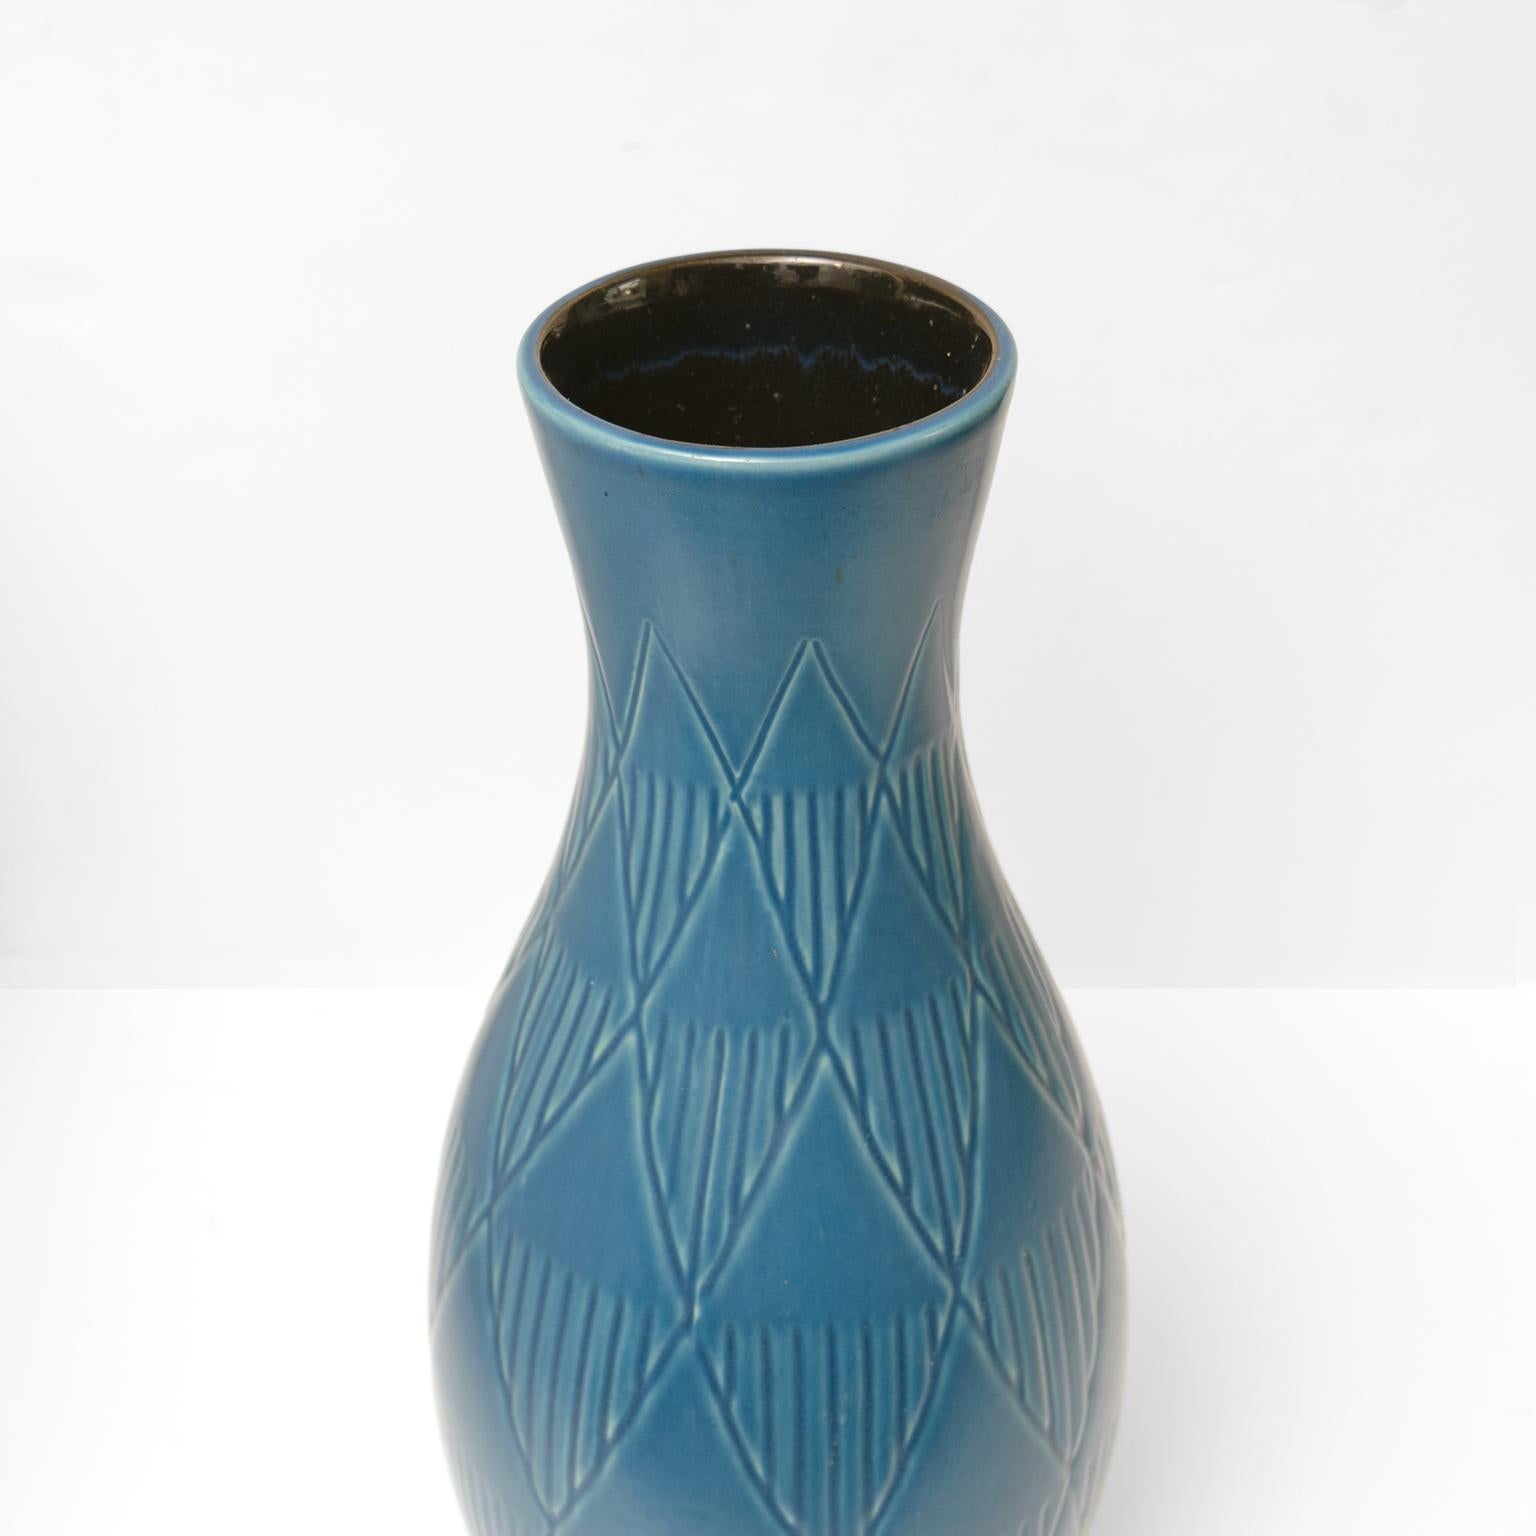 Bo Fajans Blaue bauchige Keramikvase mit geometrischem Muster in Relief, Schweden 1940 (Skandinavische Moderne) im Angebot